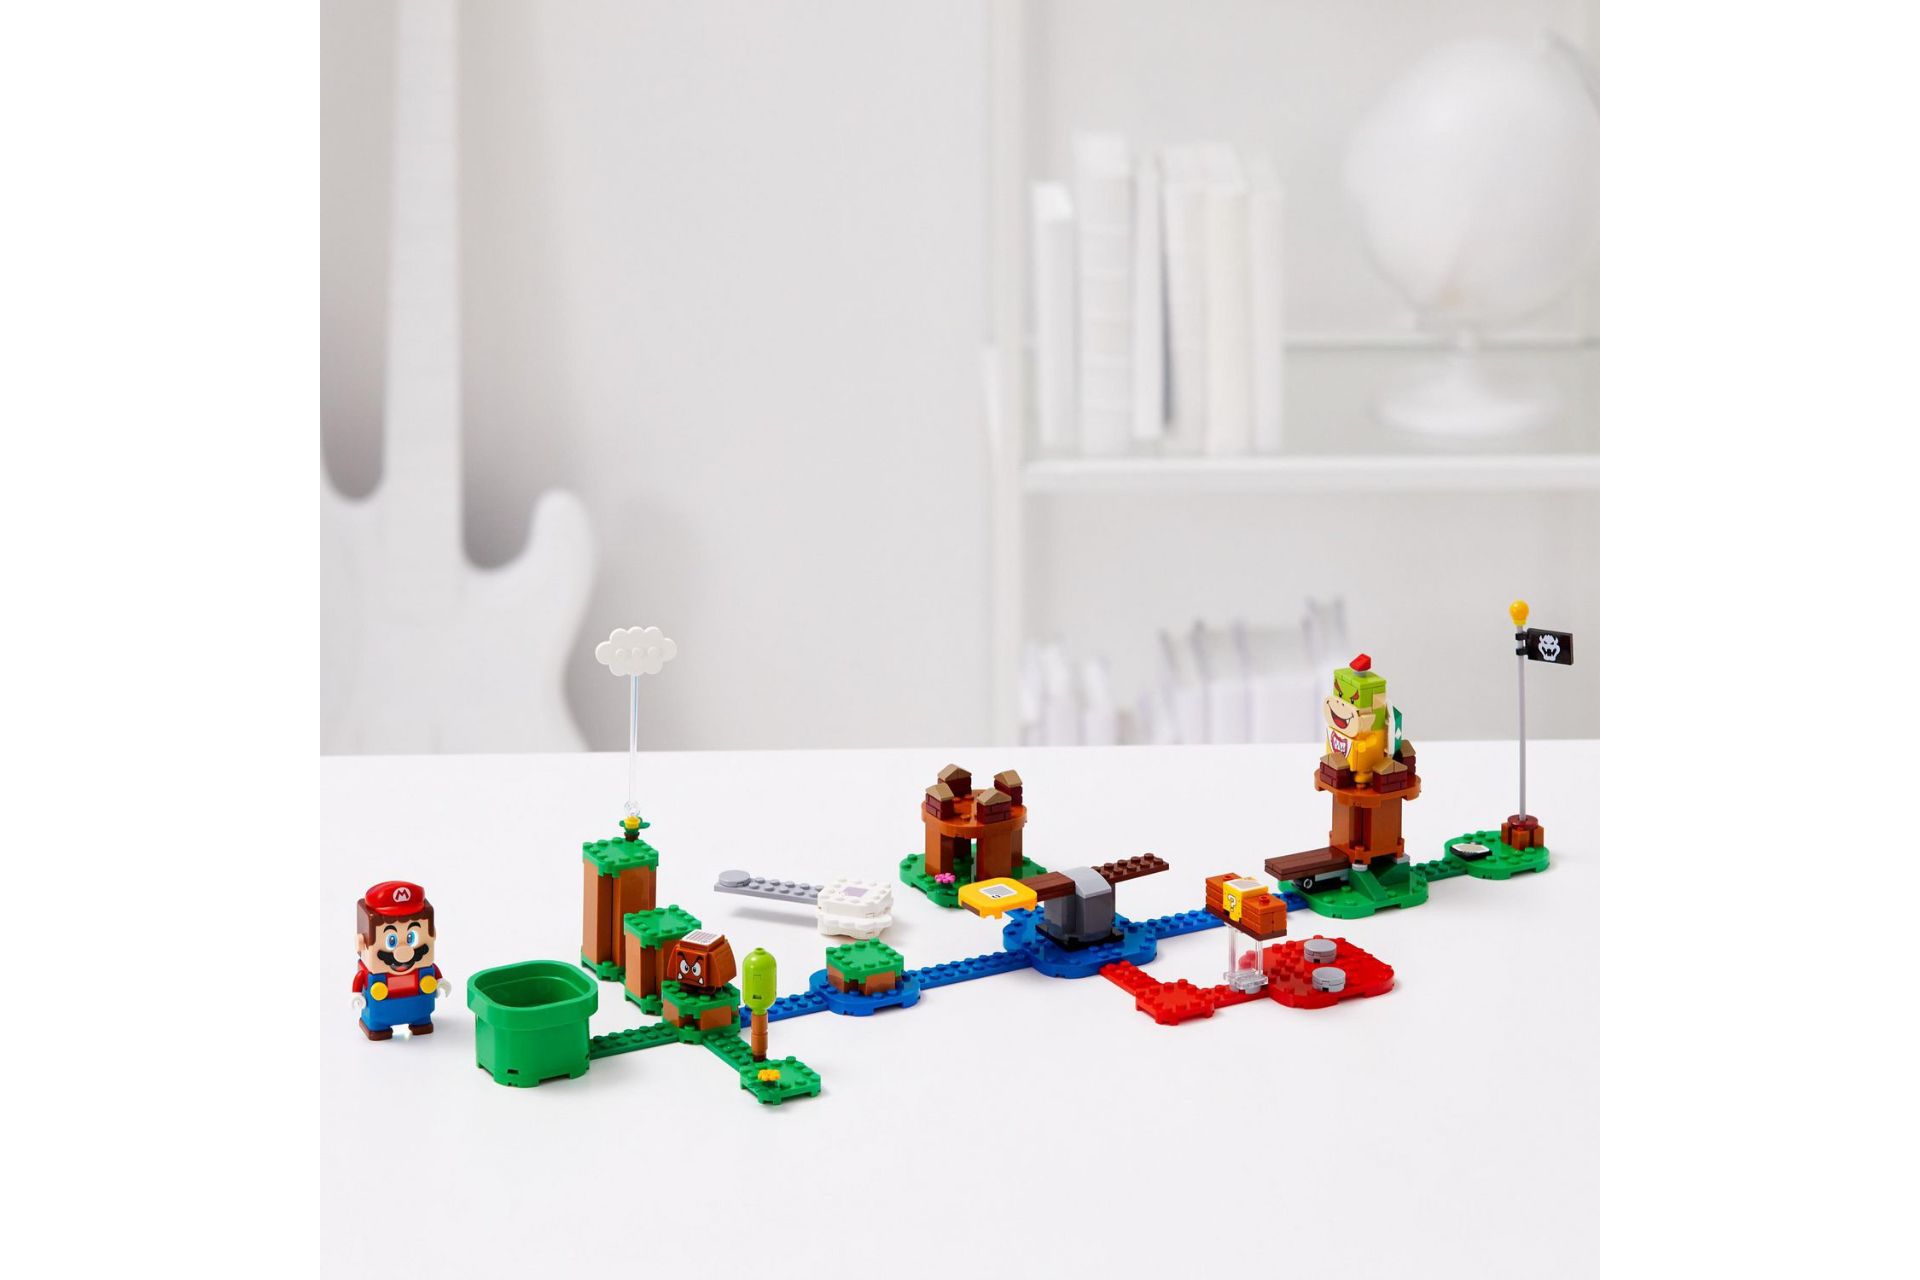 Mario and Luigi LEGO figurines with accessories